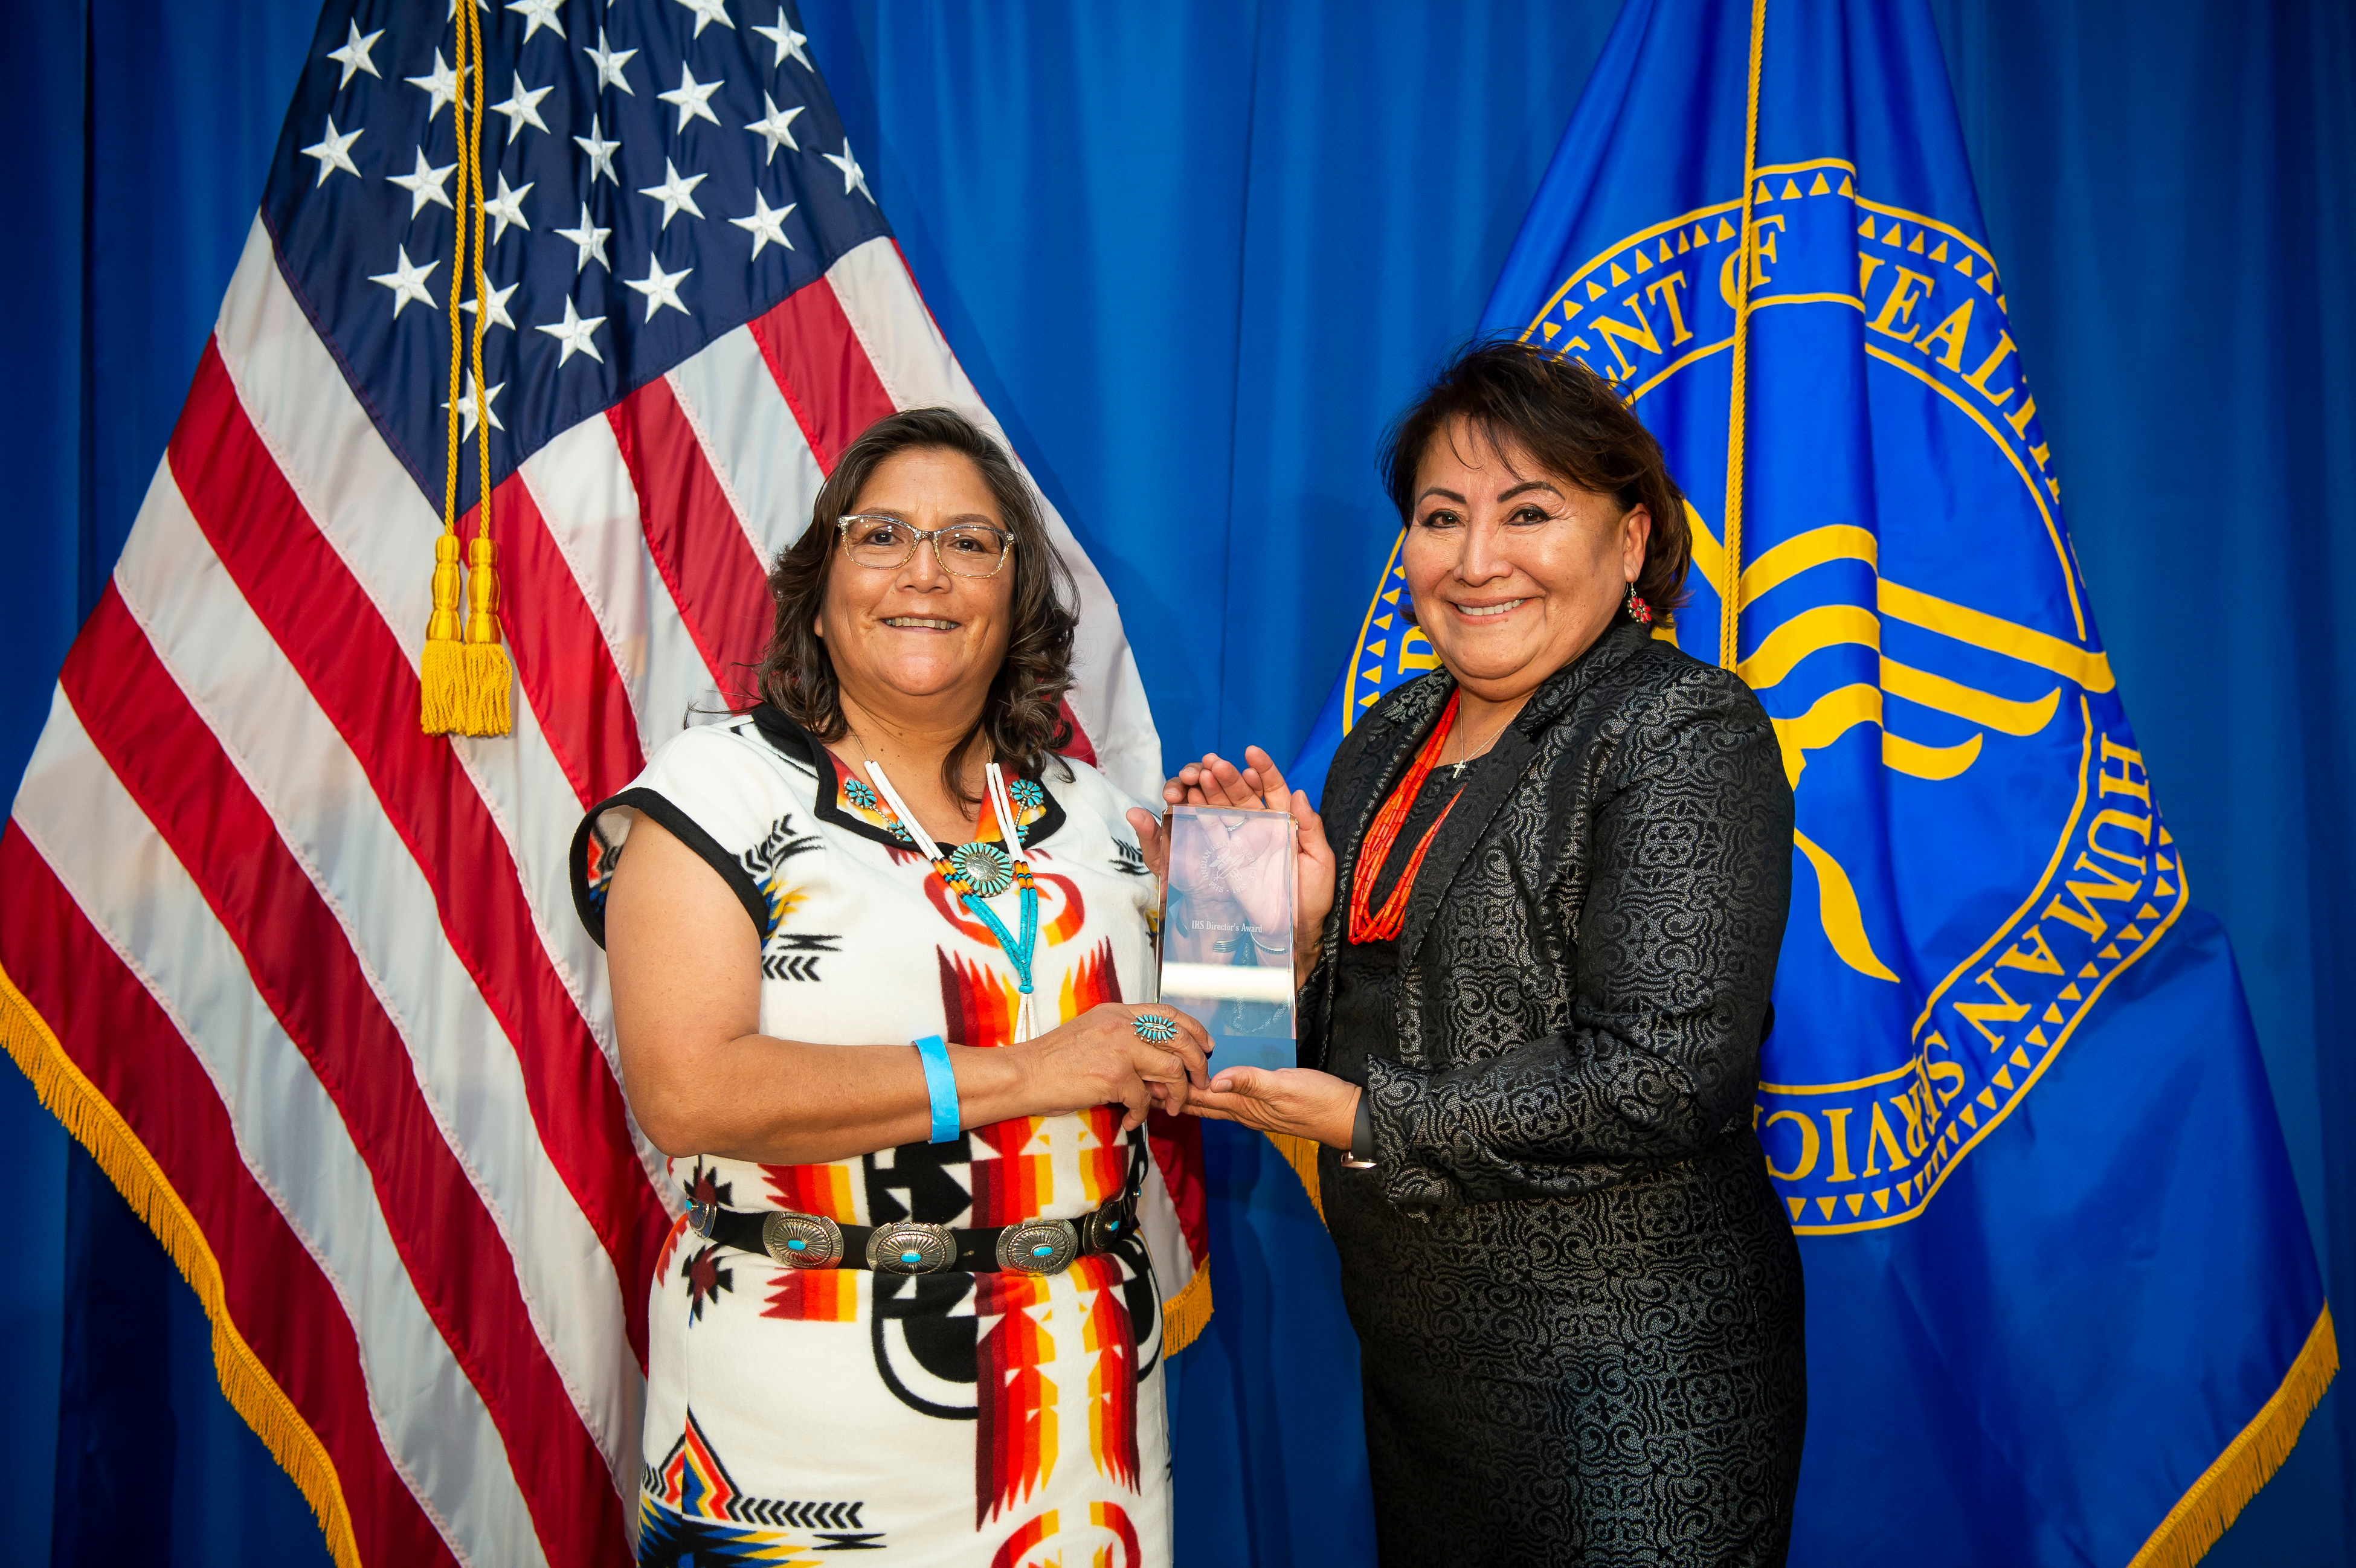 Director's Award - Individual Category - Colleen Ben (Navajo)